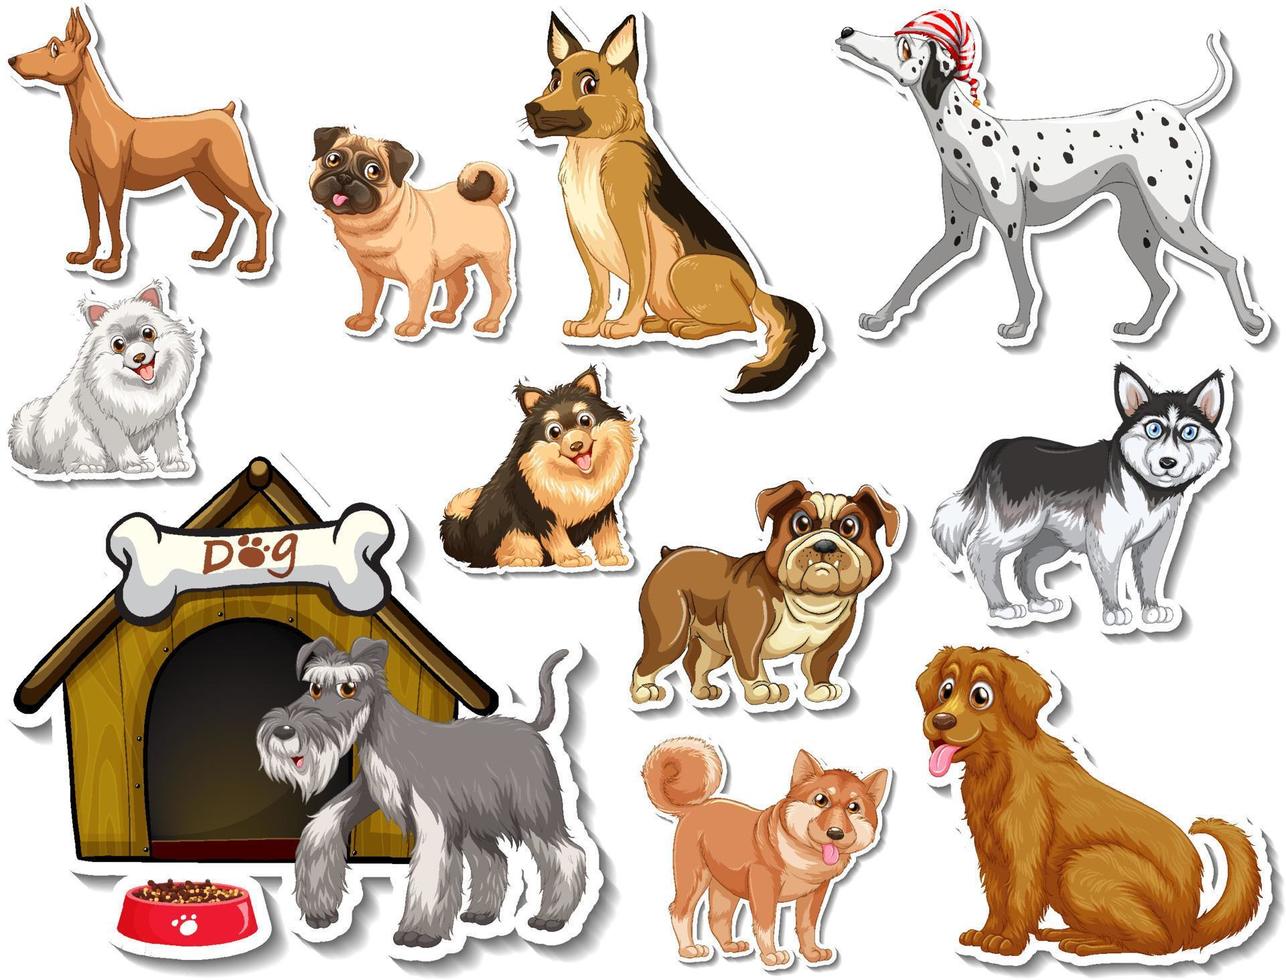 Sticker set of different dogs cartoon vector